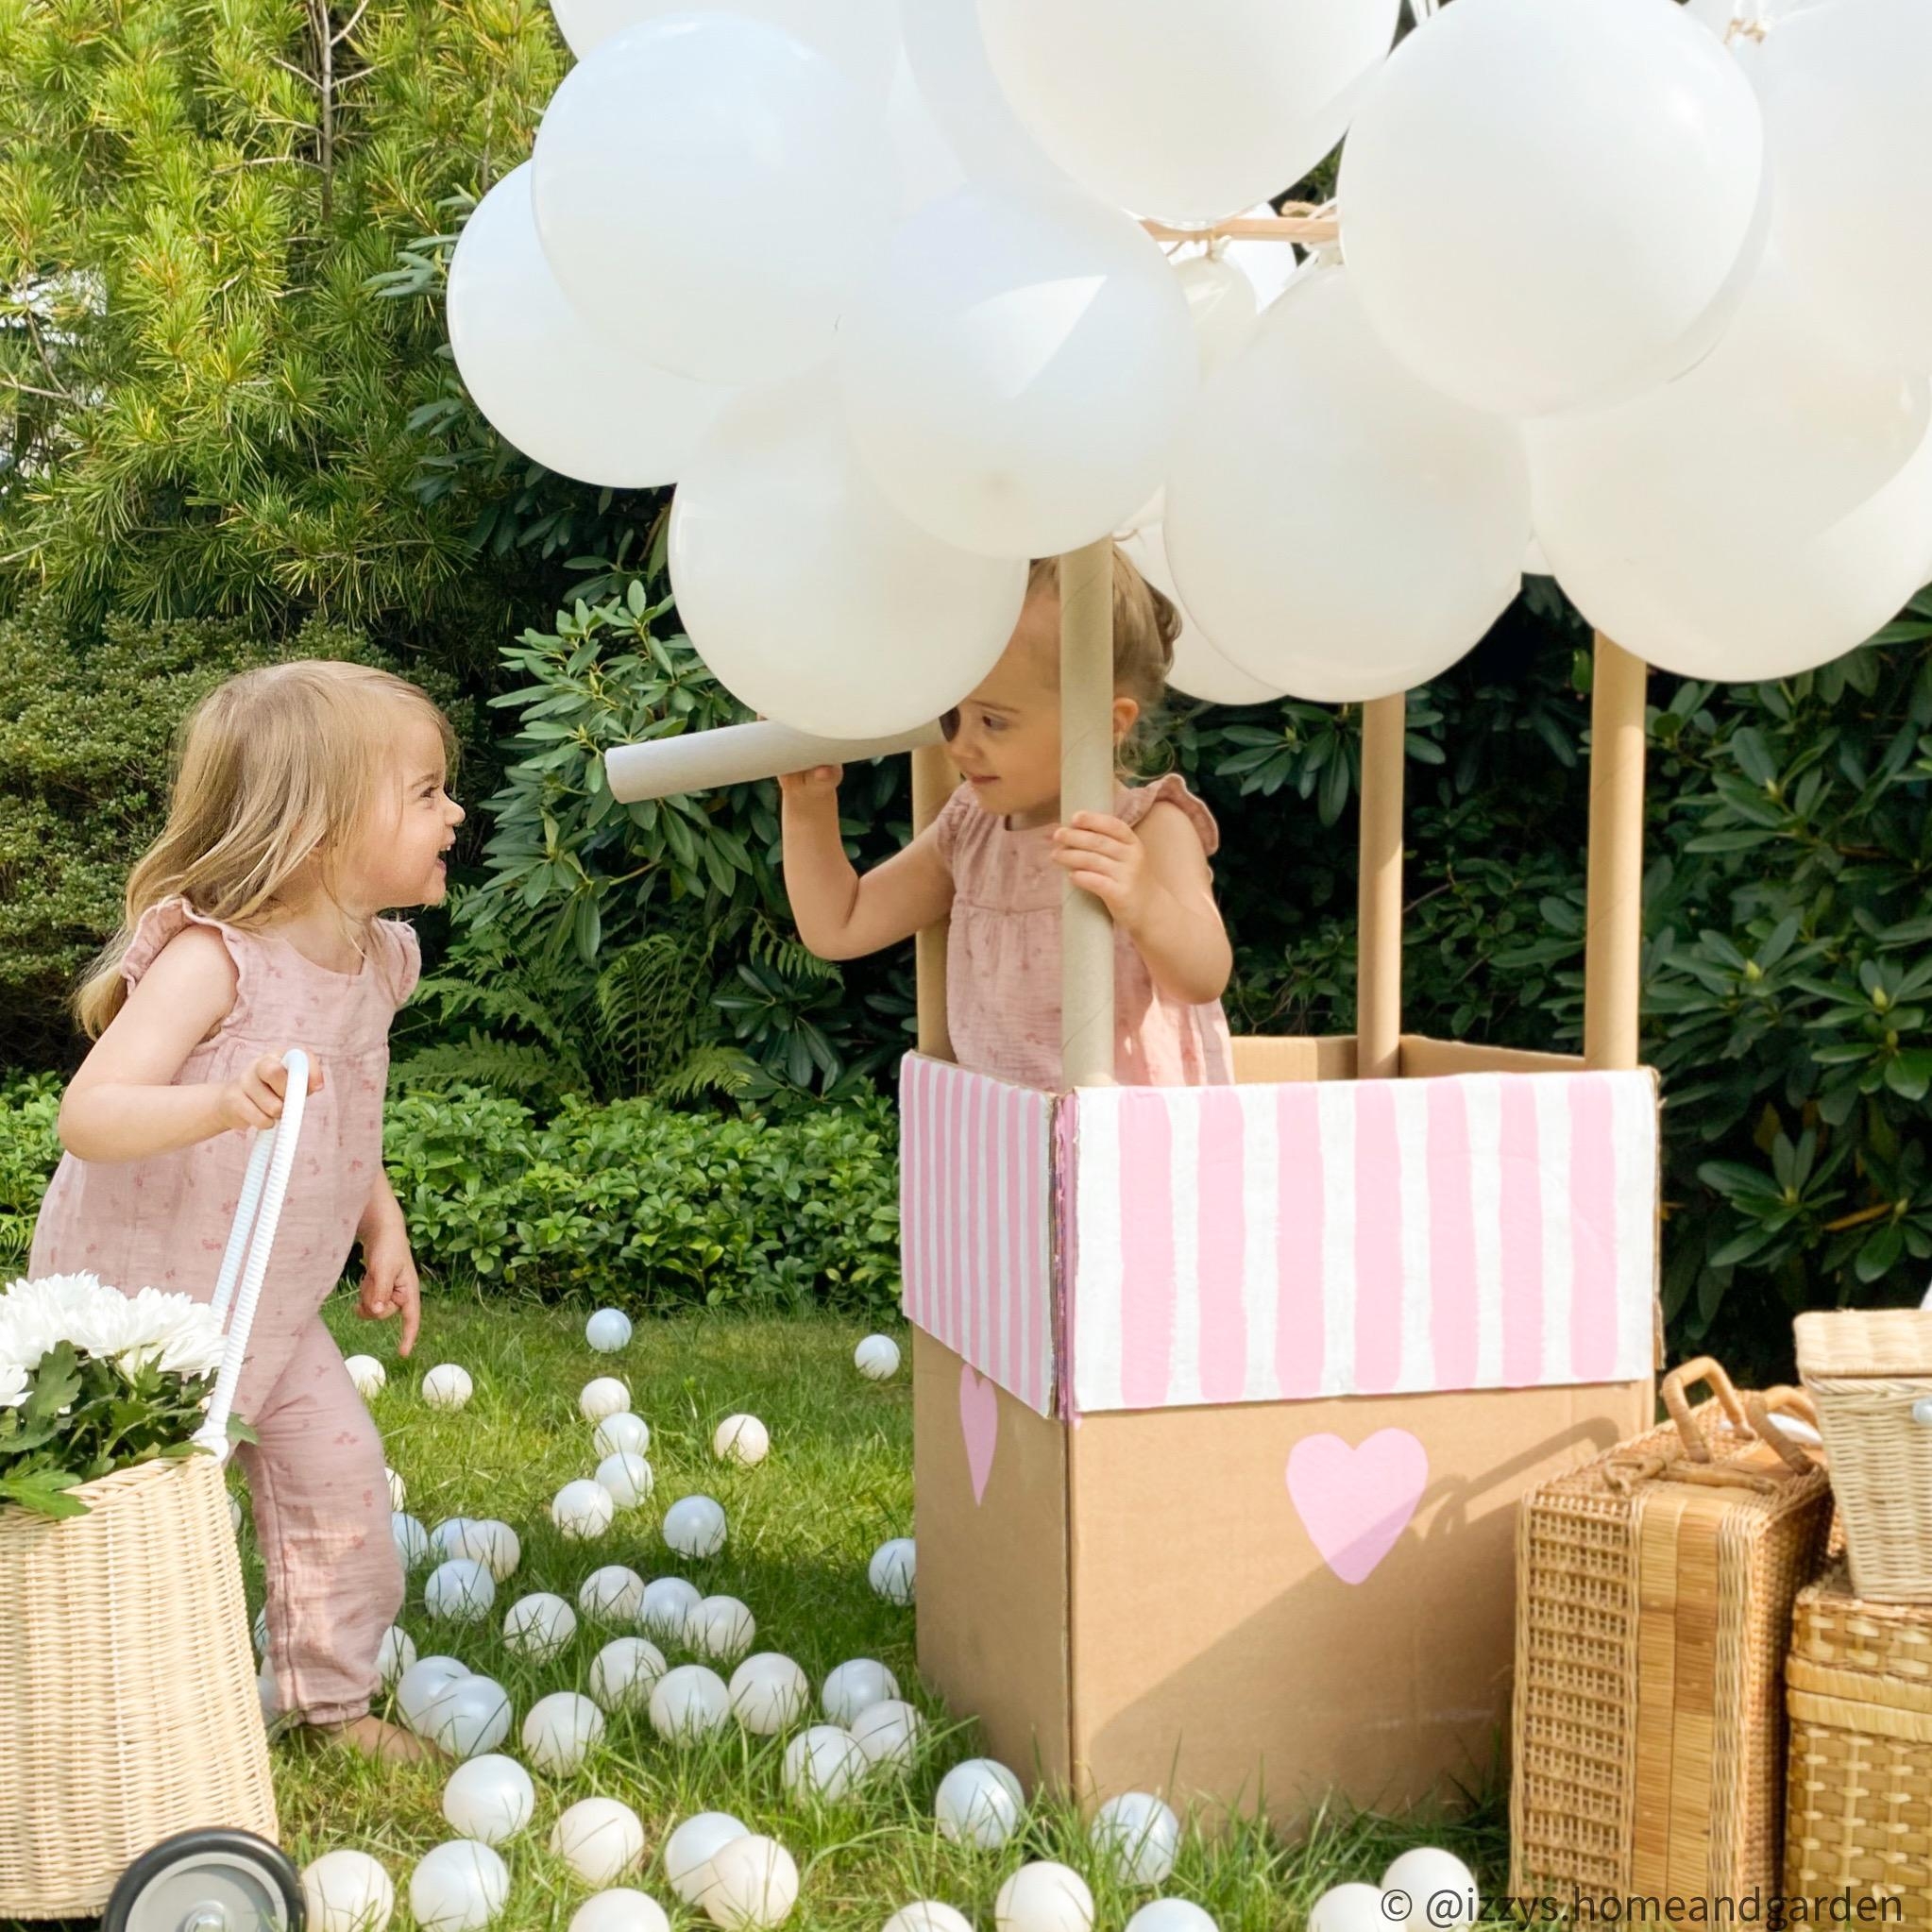 #kidskartonliebe #karton #diy #doityourself #kartonliebe #upcycling #recycling #kidsstuff #luftballons #heißluftballons